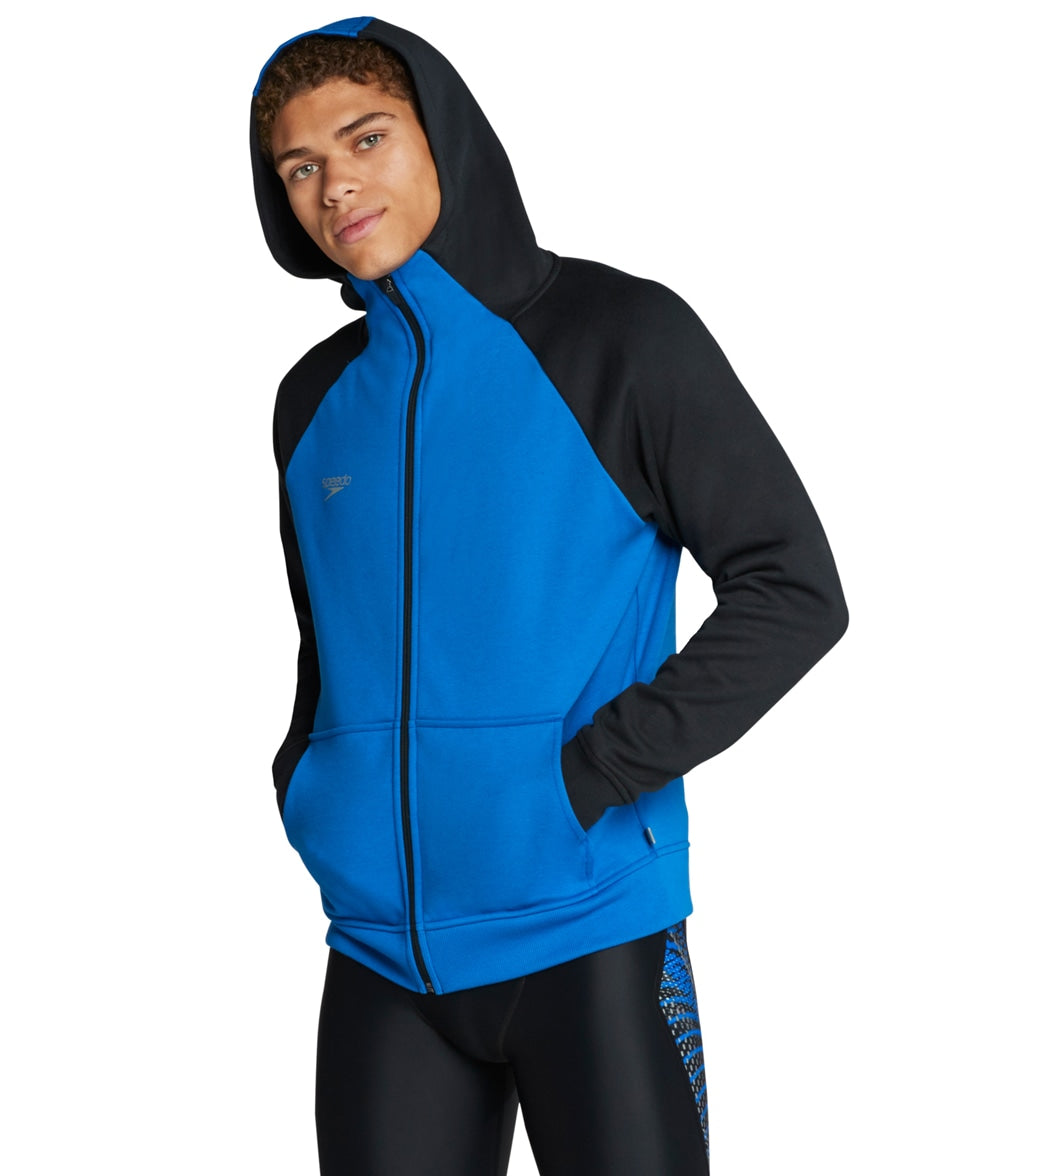 Speedo Men's Team Jacket - Blue Large Size Large Cotton/Polyester - Swimoutlet.com